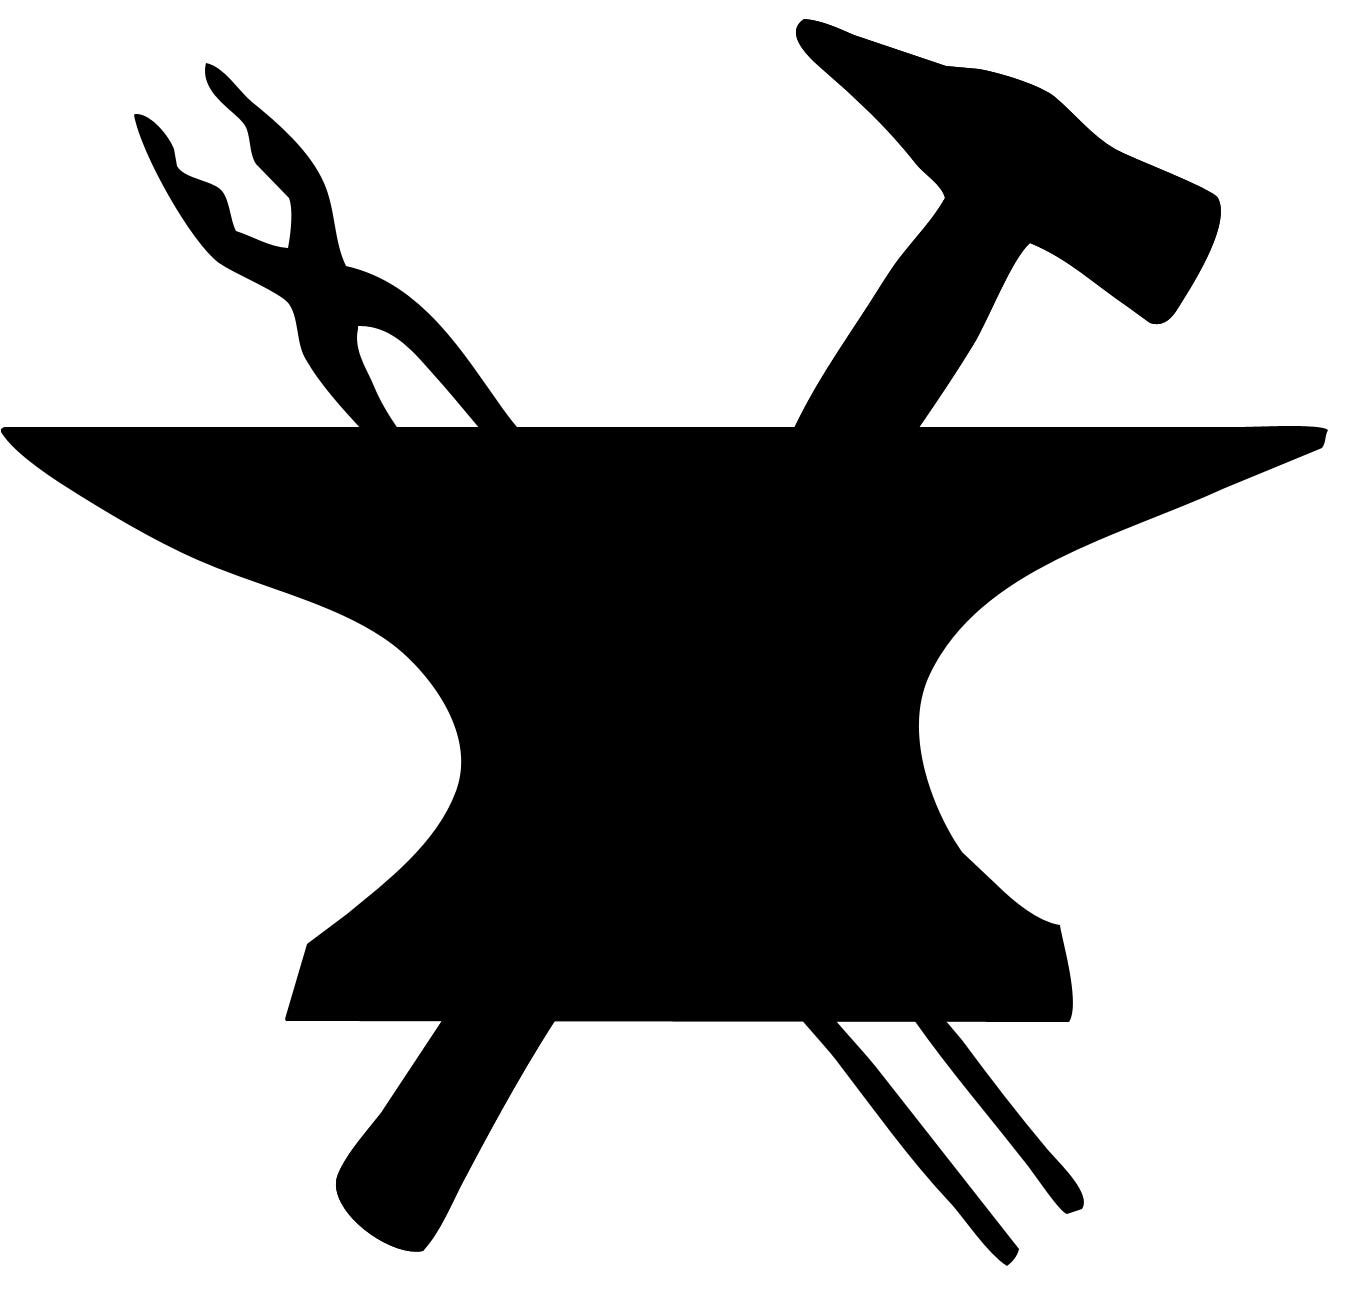 File icon symbol hammer. Anvil clipart blacksmith shop